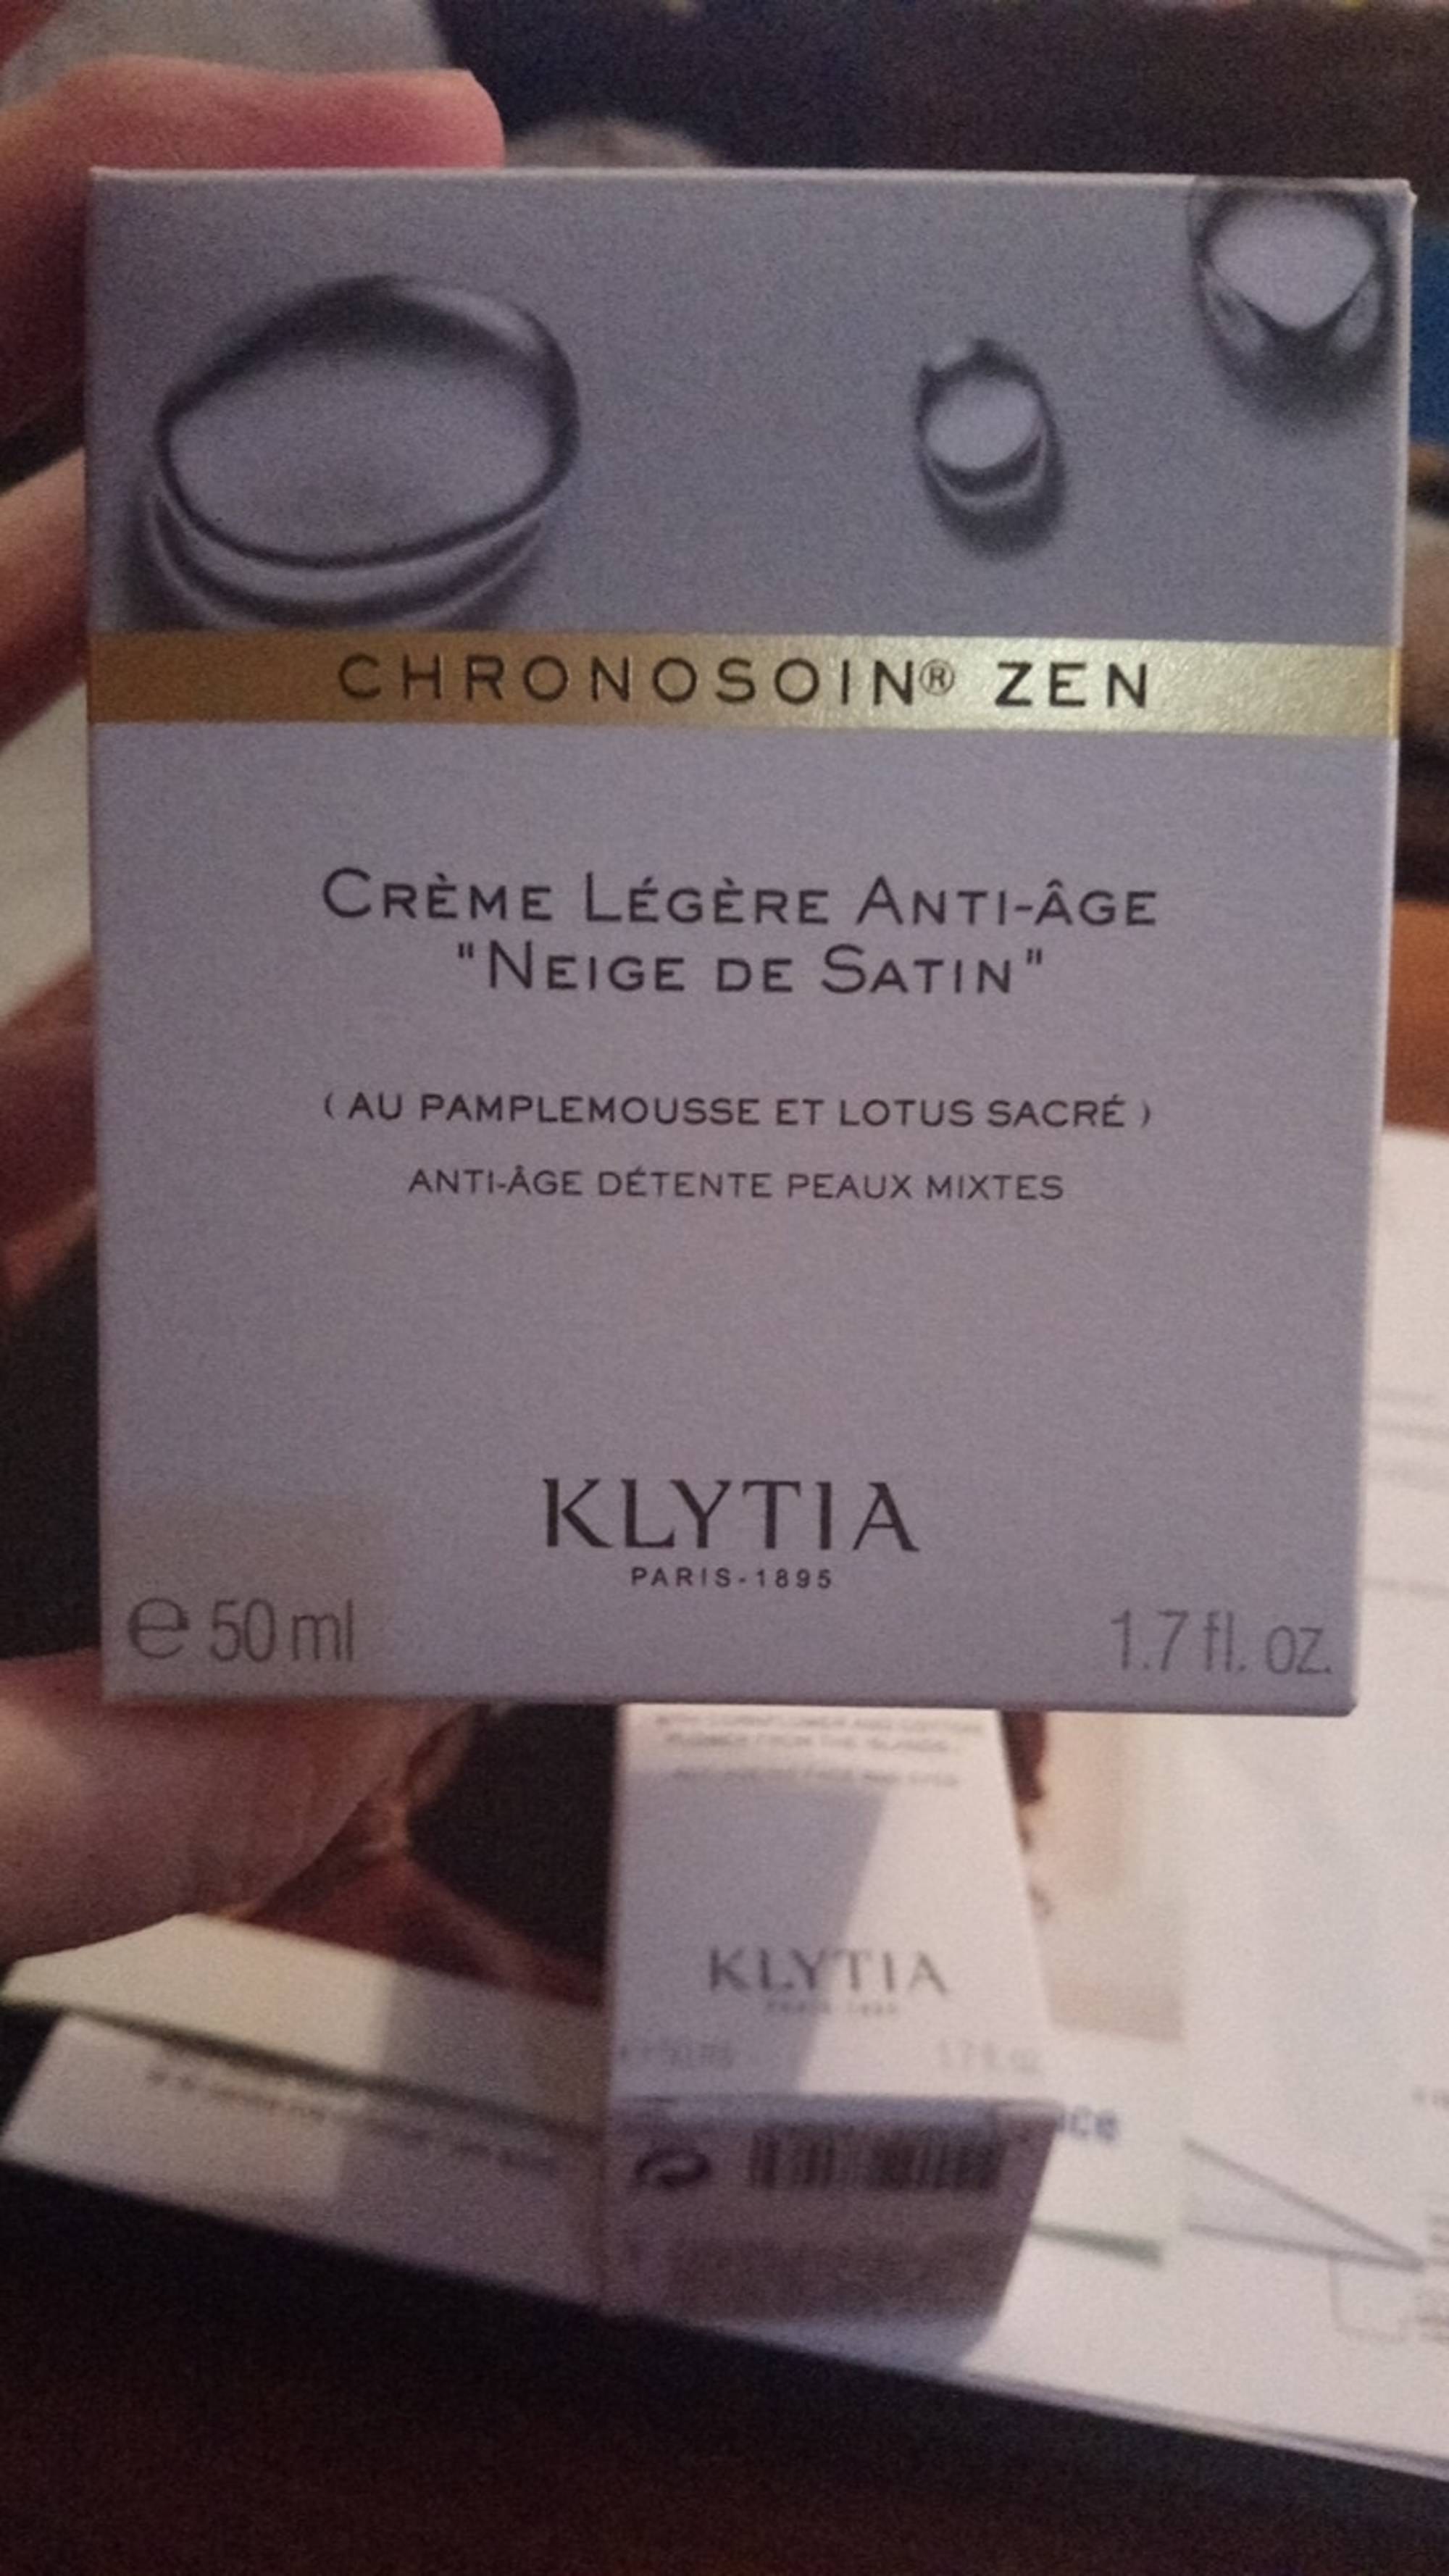 KLYTIA - Chronosoin - Crème légère anti-âge 